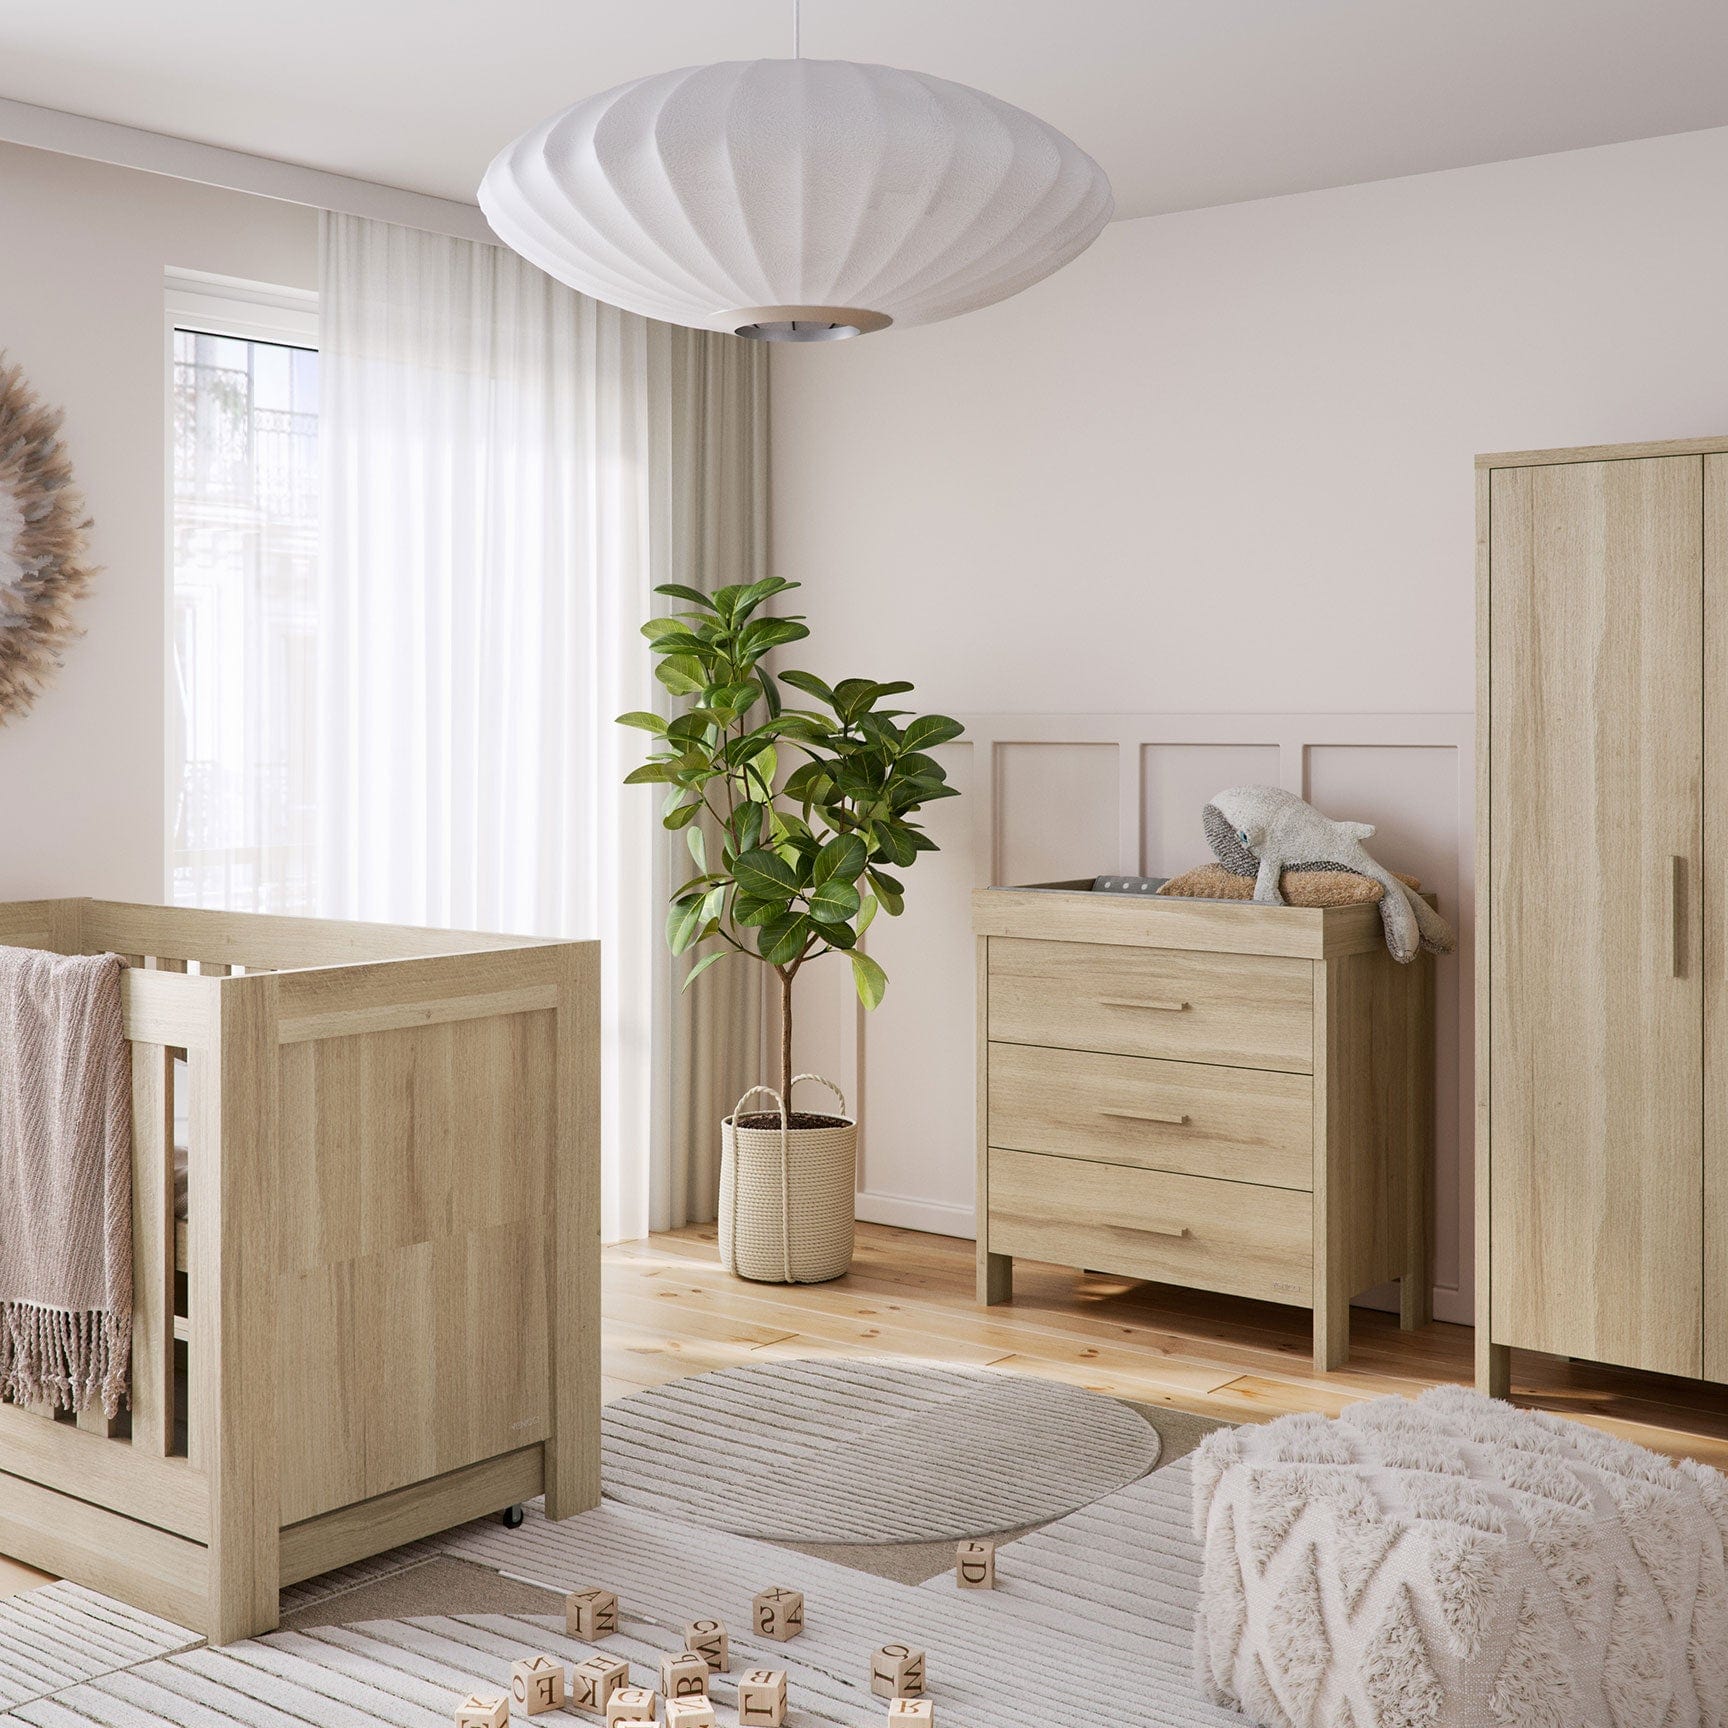 Venicci Forenzo 2 Piece Wardrobe Roomset in Honey Oak Nursery Room Sets